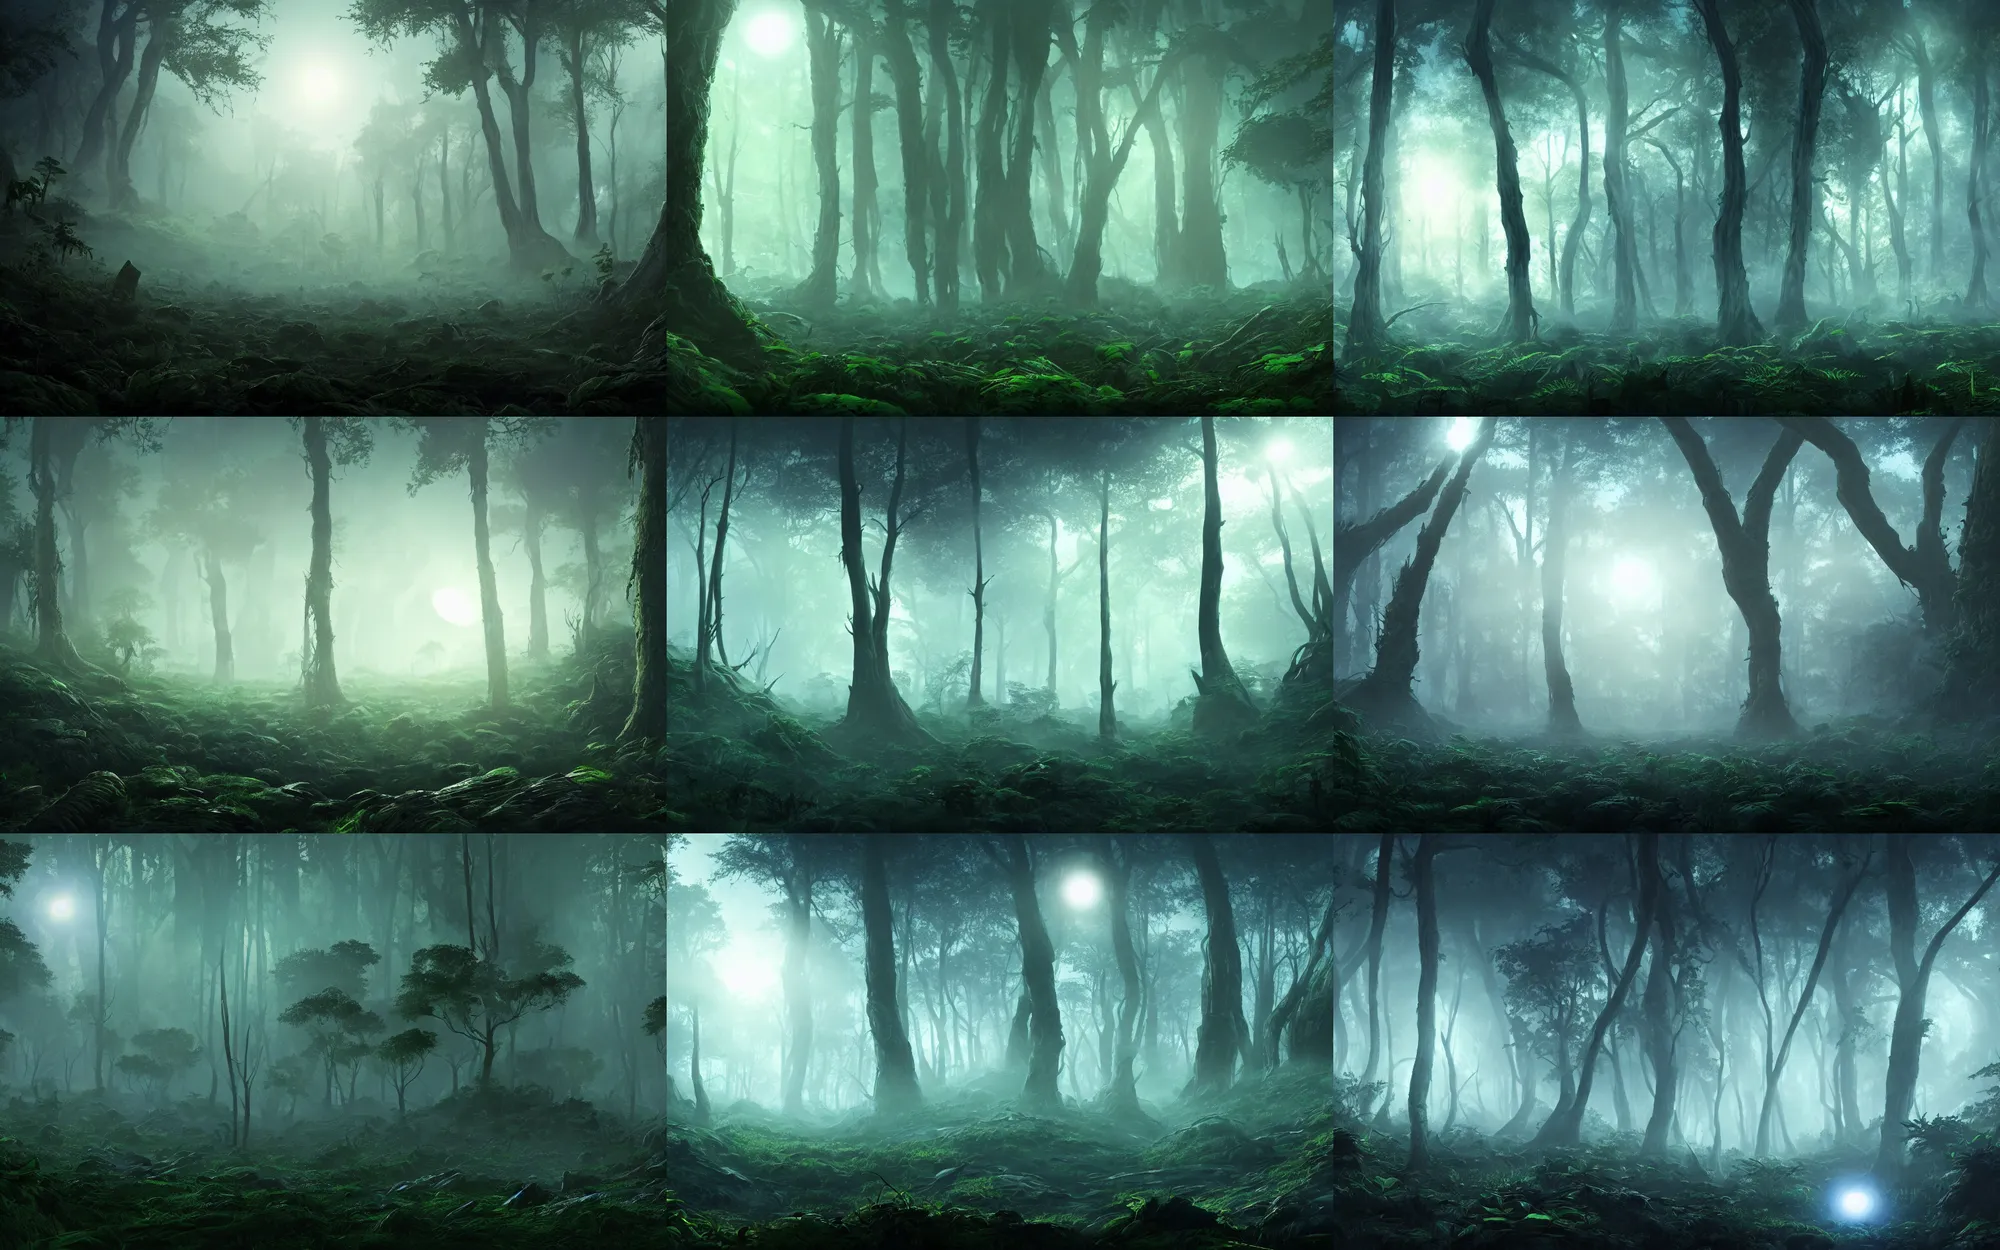 Prompt: alien planet landscape wild dense foggy alien forest trees with big leaves very dense undergrowth very dangerous uneasy atmosphere ominous lighting visible glowing eyes intricate detail artstation 8 k